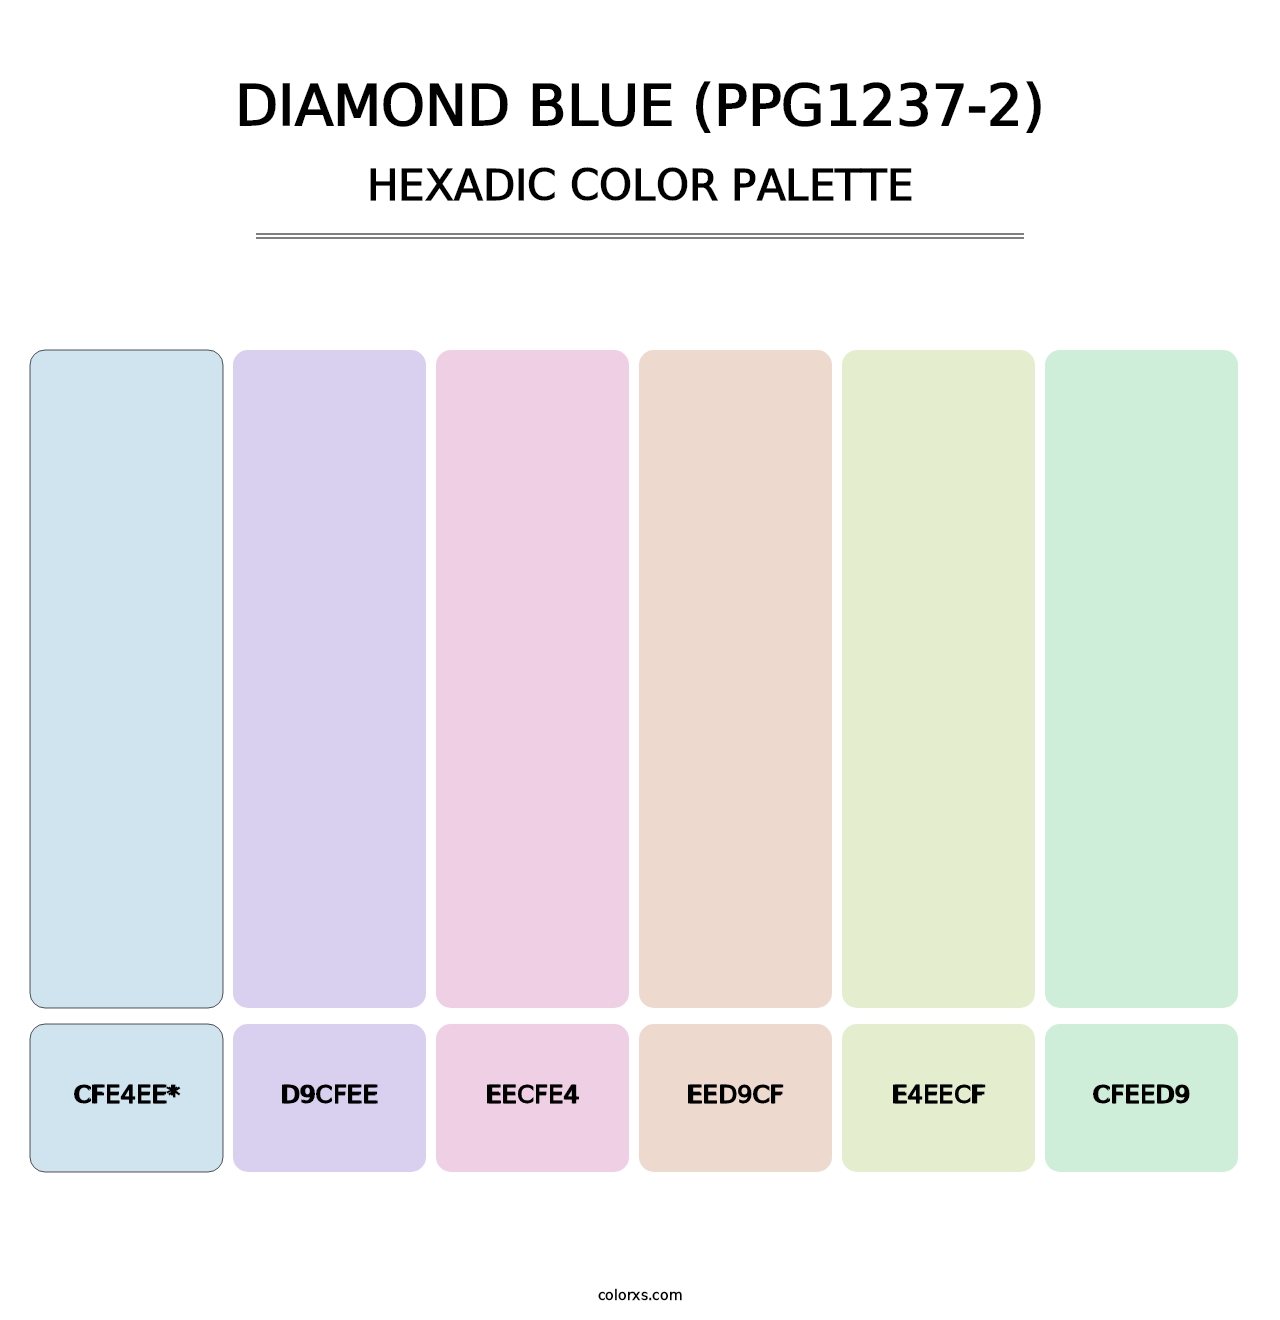 Diamond Blue (PPG1237-2) - Hexadic Color Palette